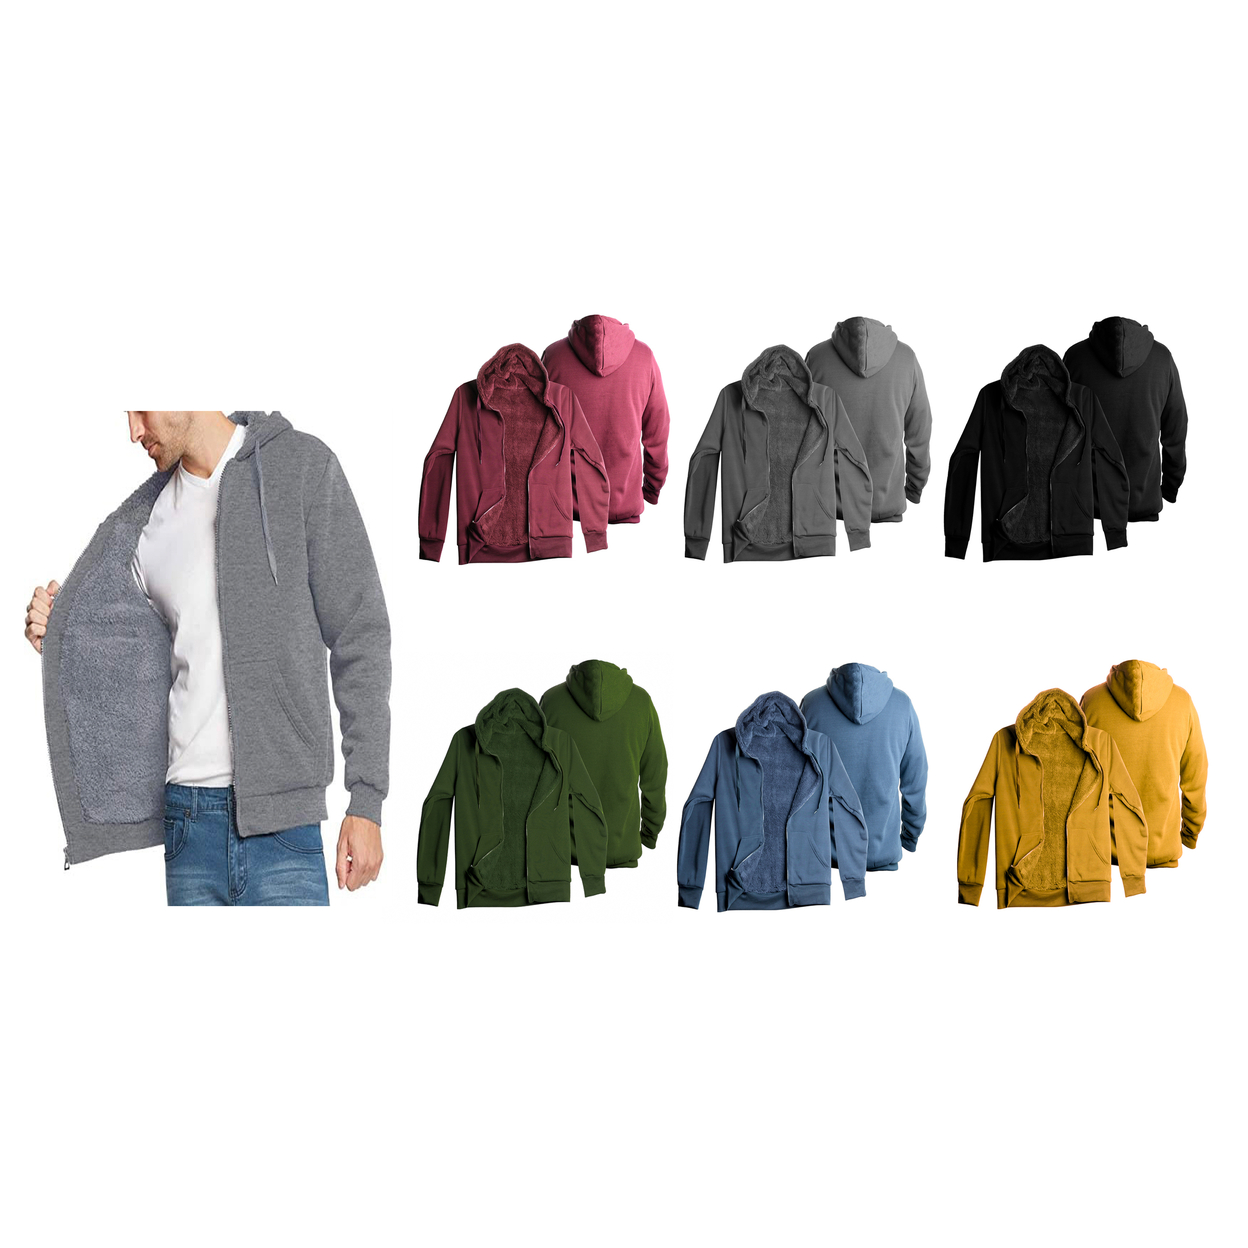 Men's Big & Tall Heavyweight Soft Sherpa Lined Fleece Zip-Up Hoodie Sweater Jacket - Burgundy, 4x